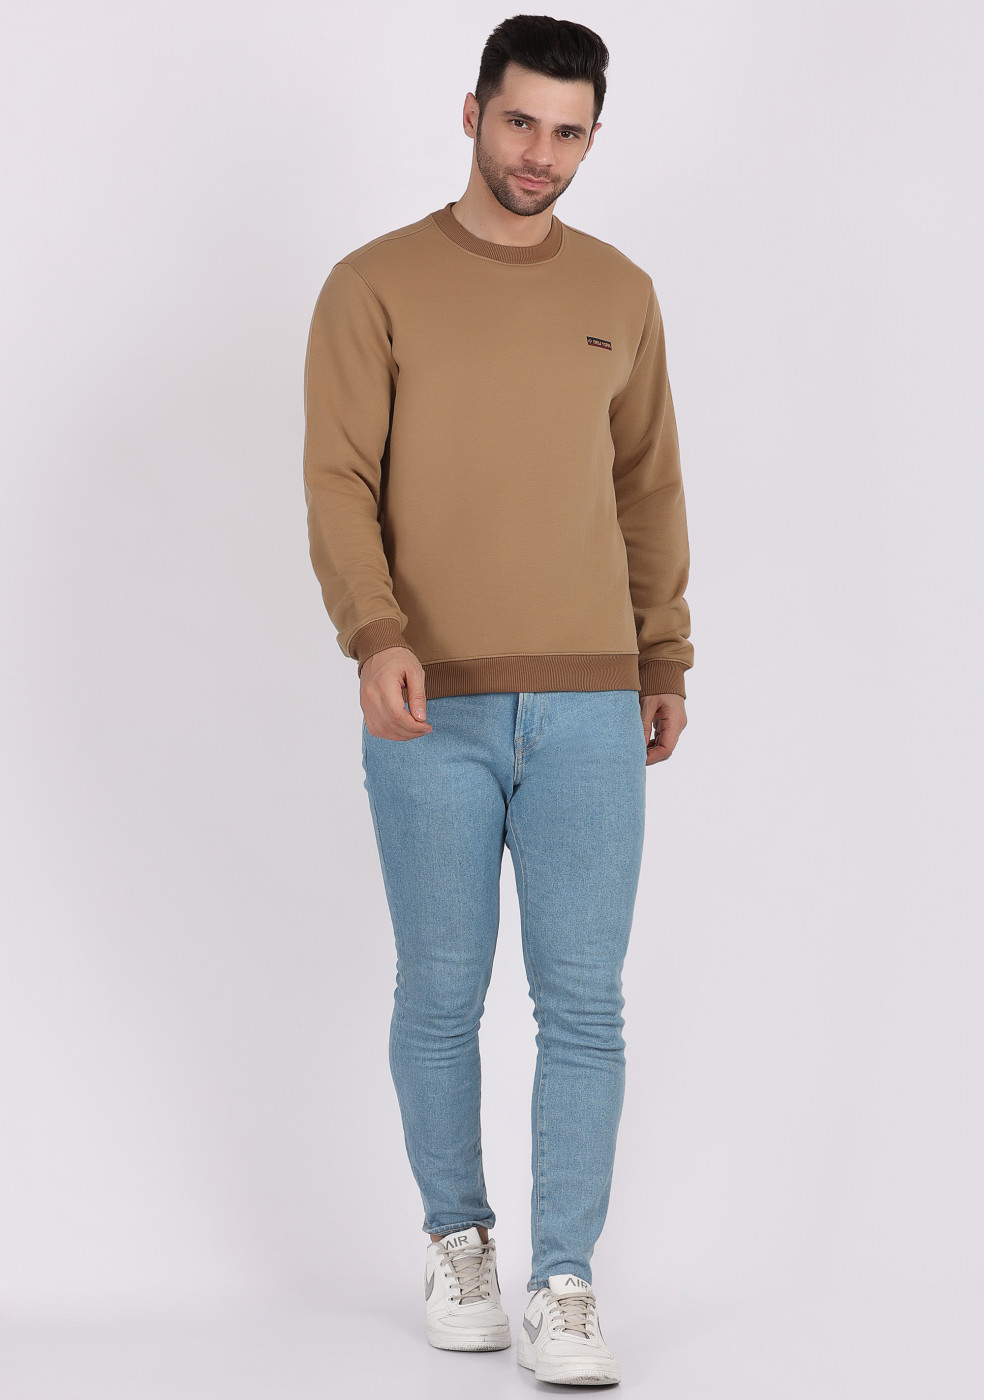 HUKH Khaki Color Sweatshirt For Men